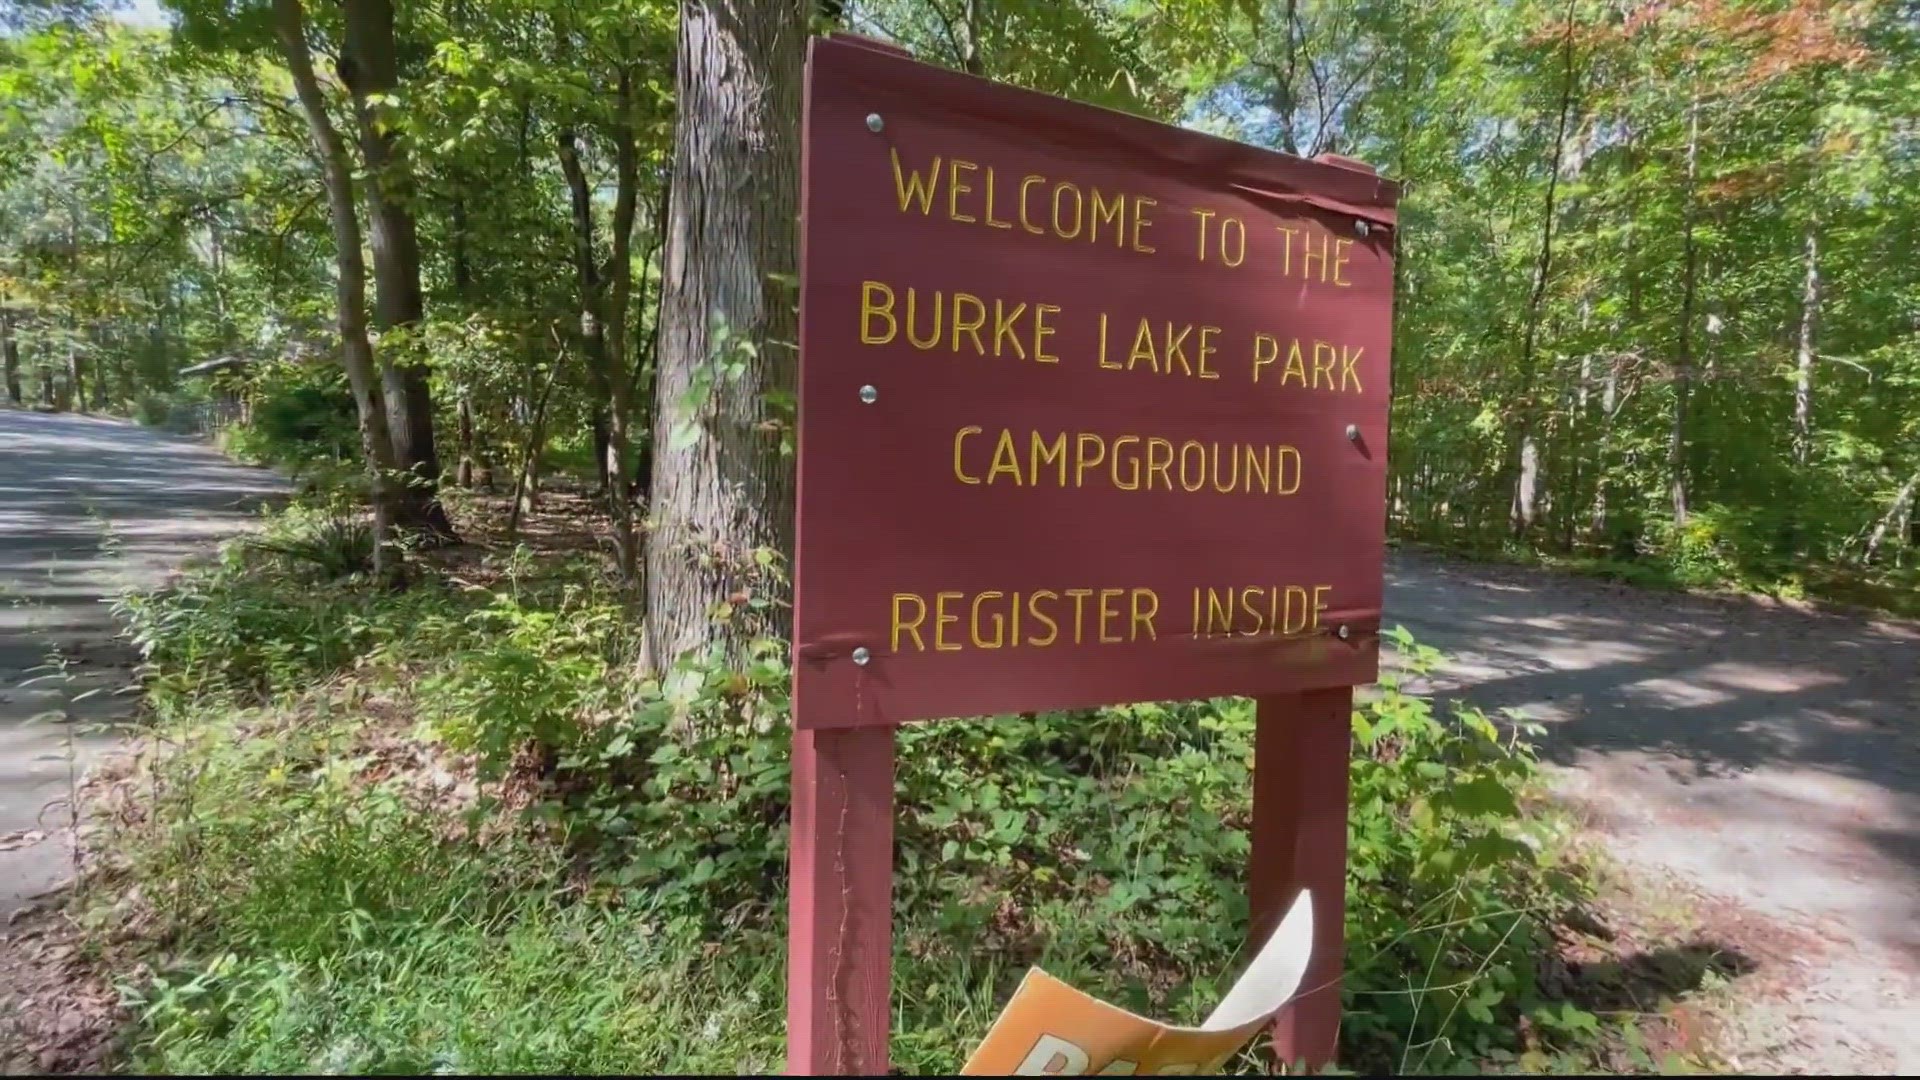 Cara Abbruscato, 40, was found dead inside a tent at Burke Lake Park Saturday.